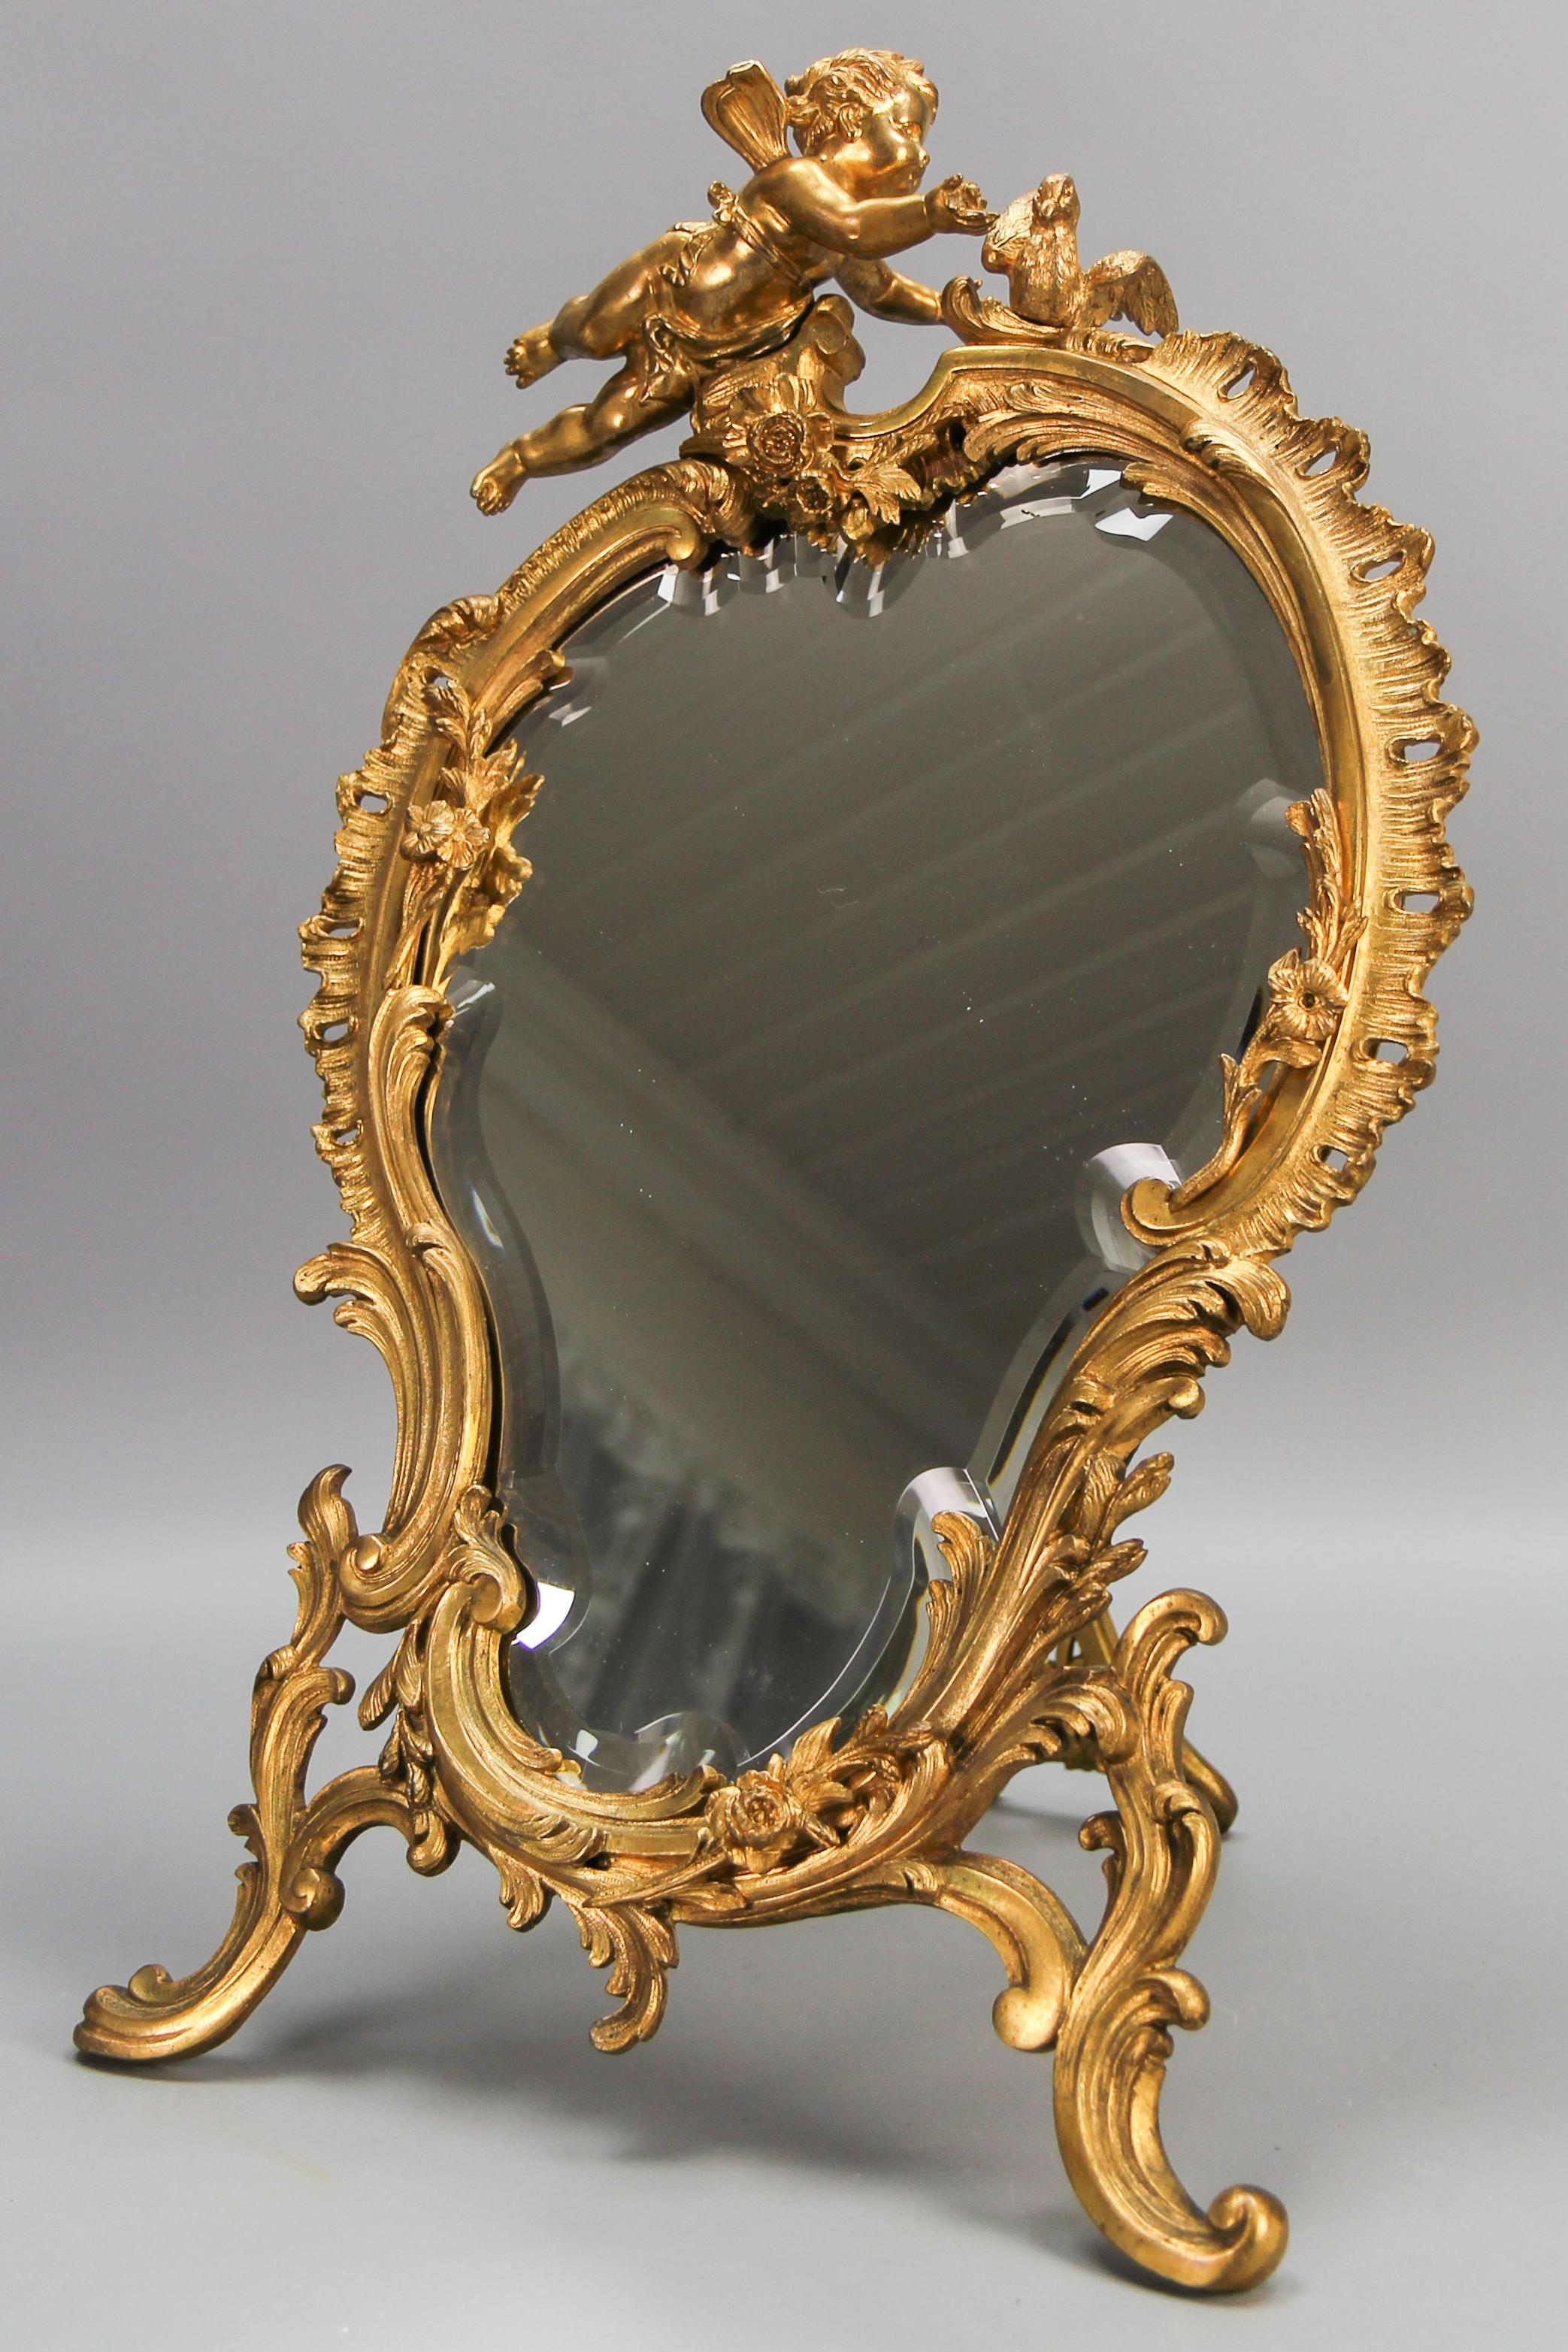 Antique French Gilt Bronze Rococo Style Desktop Mirror with Cherub and Bird For Sale 3